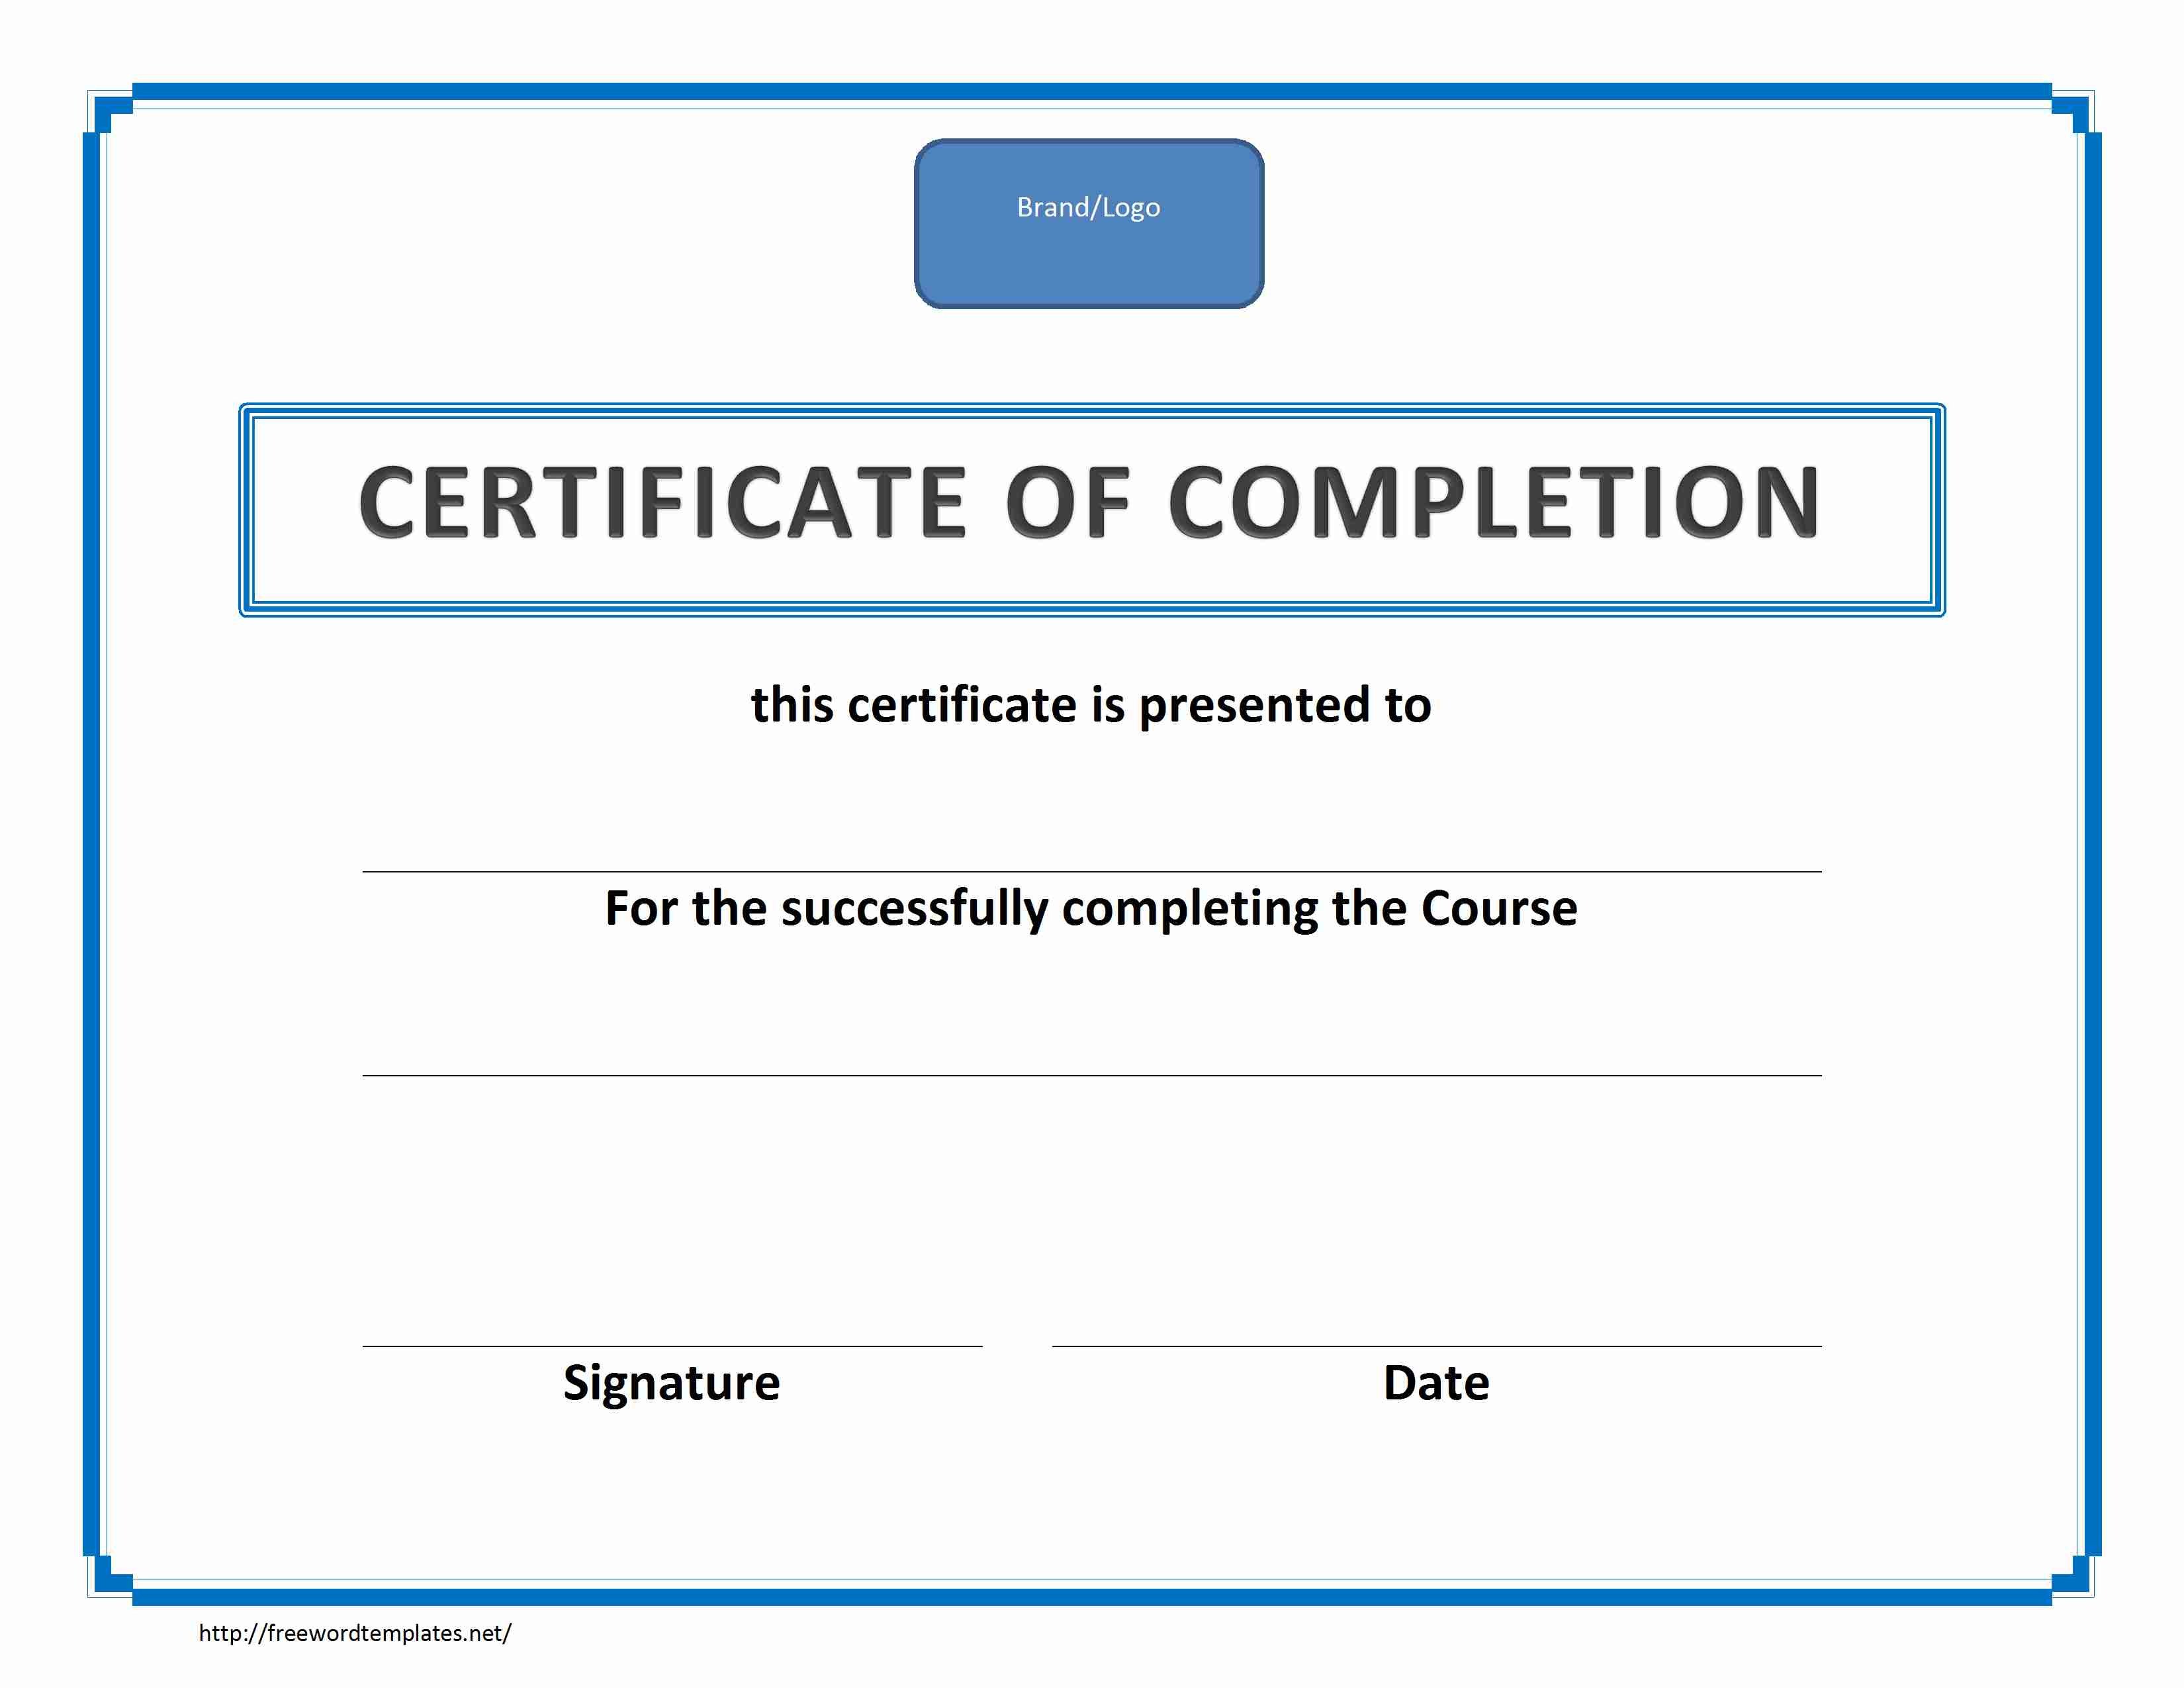 Training Certificate of pletion